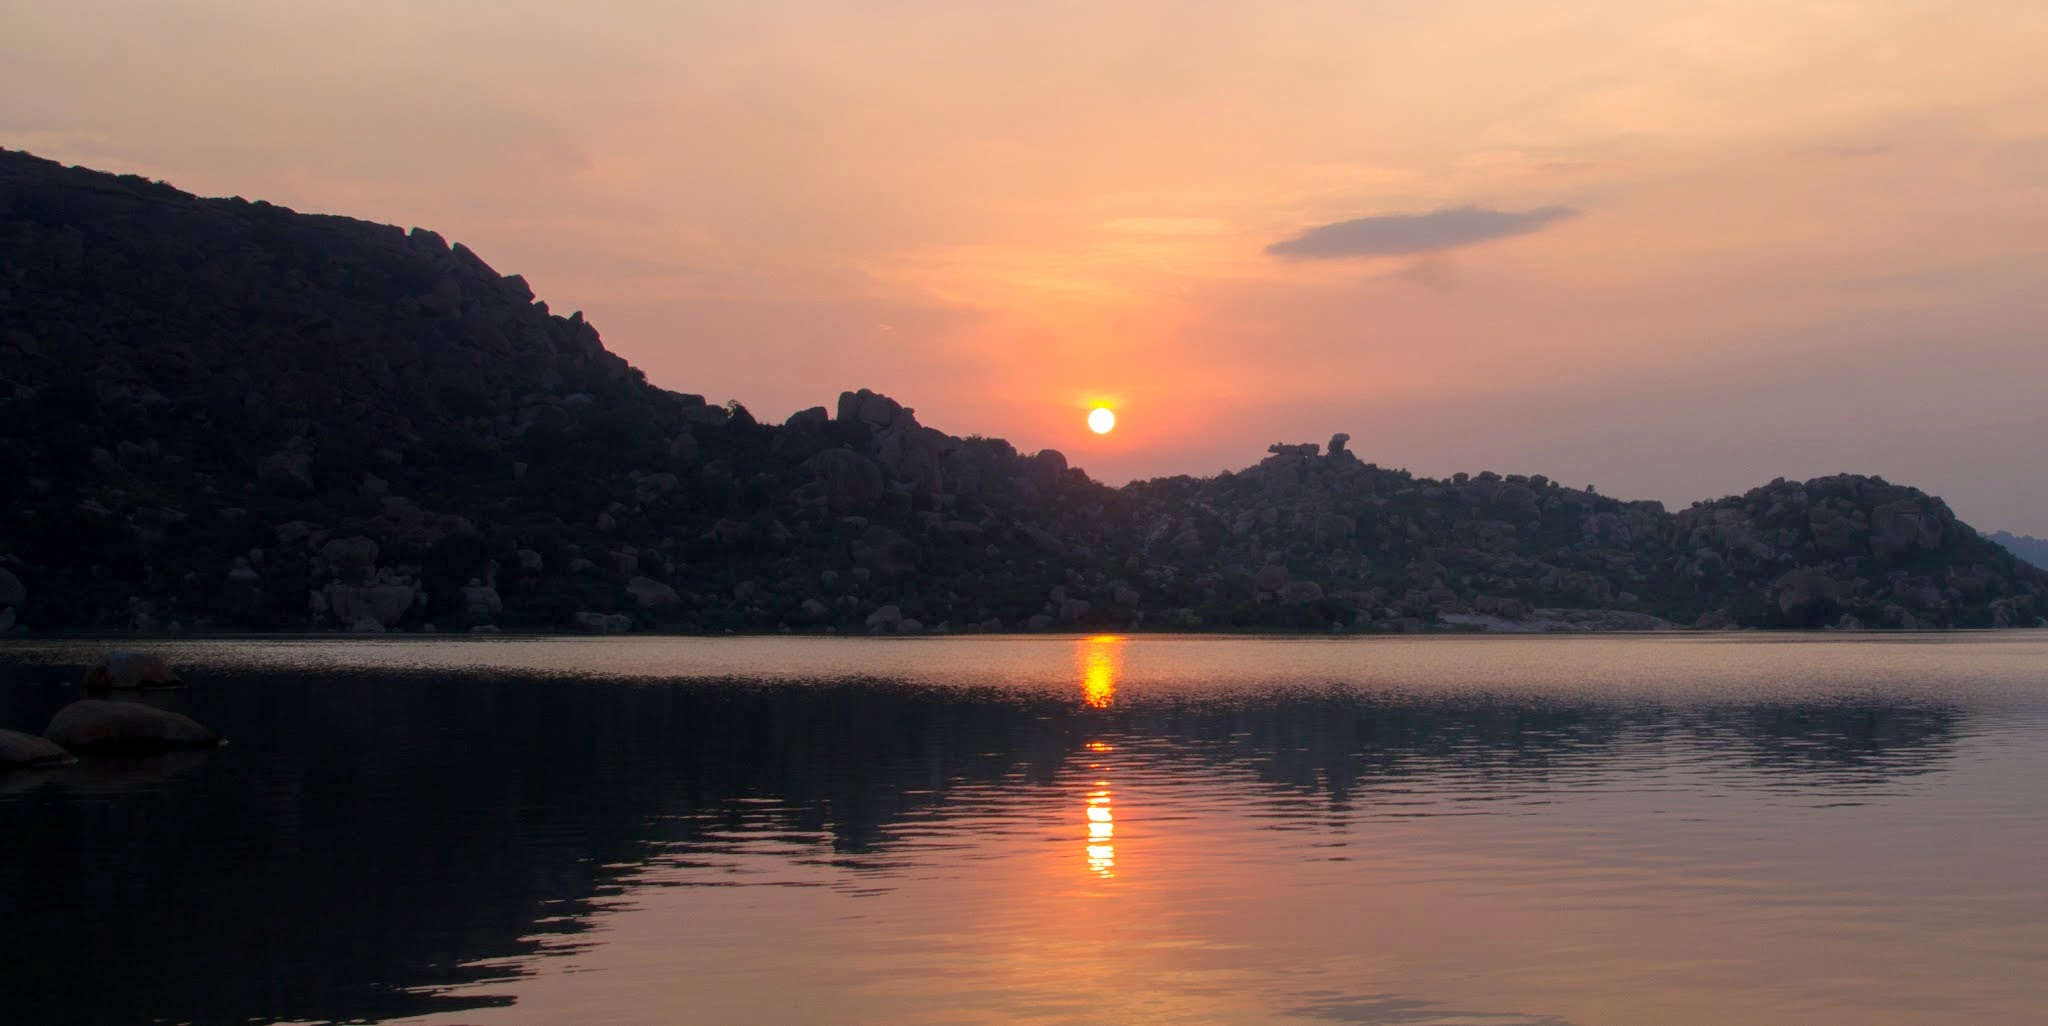 Sunset at the Sanapur Lake